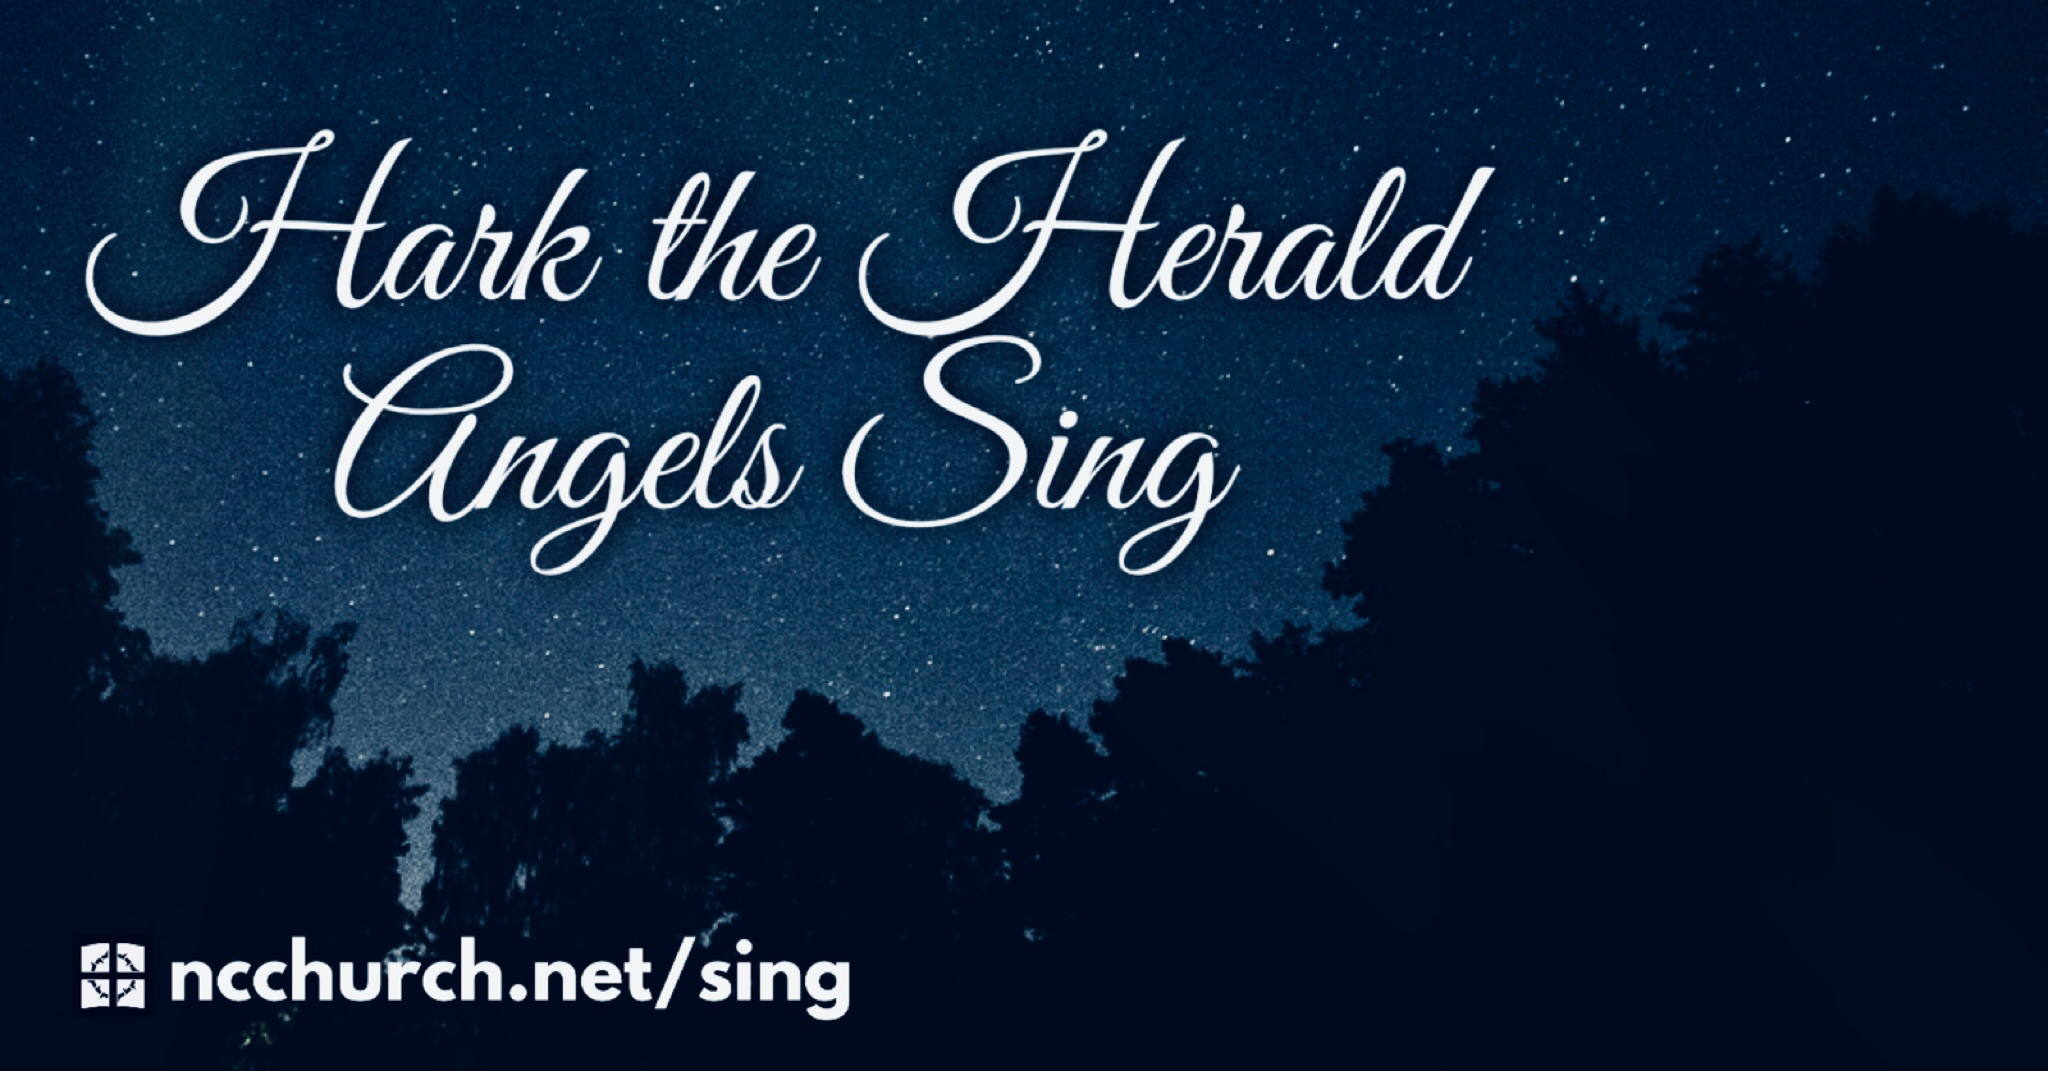 hark the herald angels sing lyrics